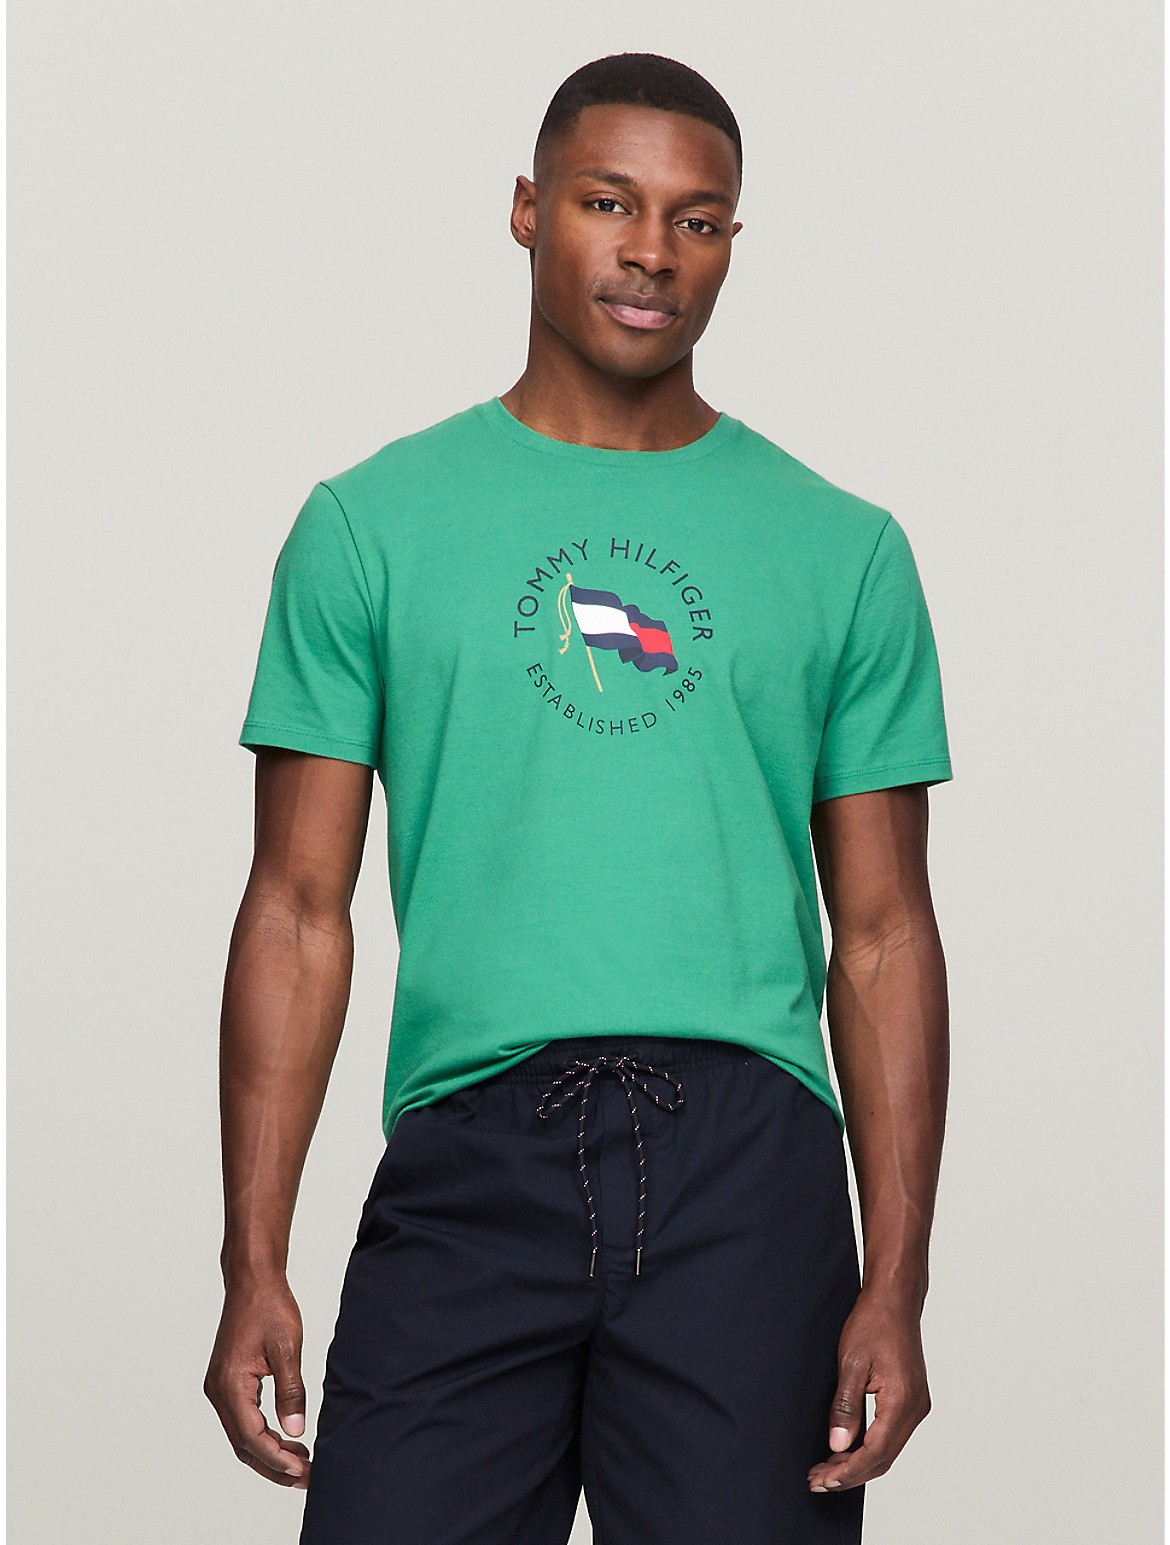 Tommy Hilfiger Men's TH Flag Graphic T-Shirt